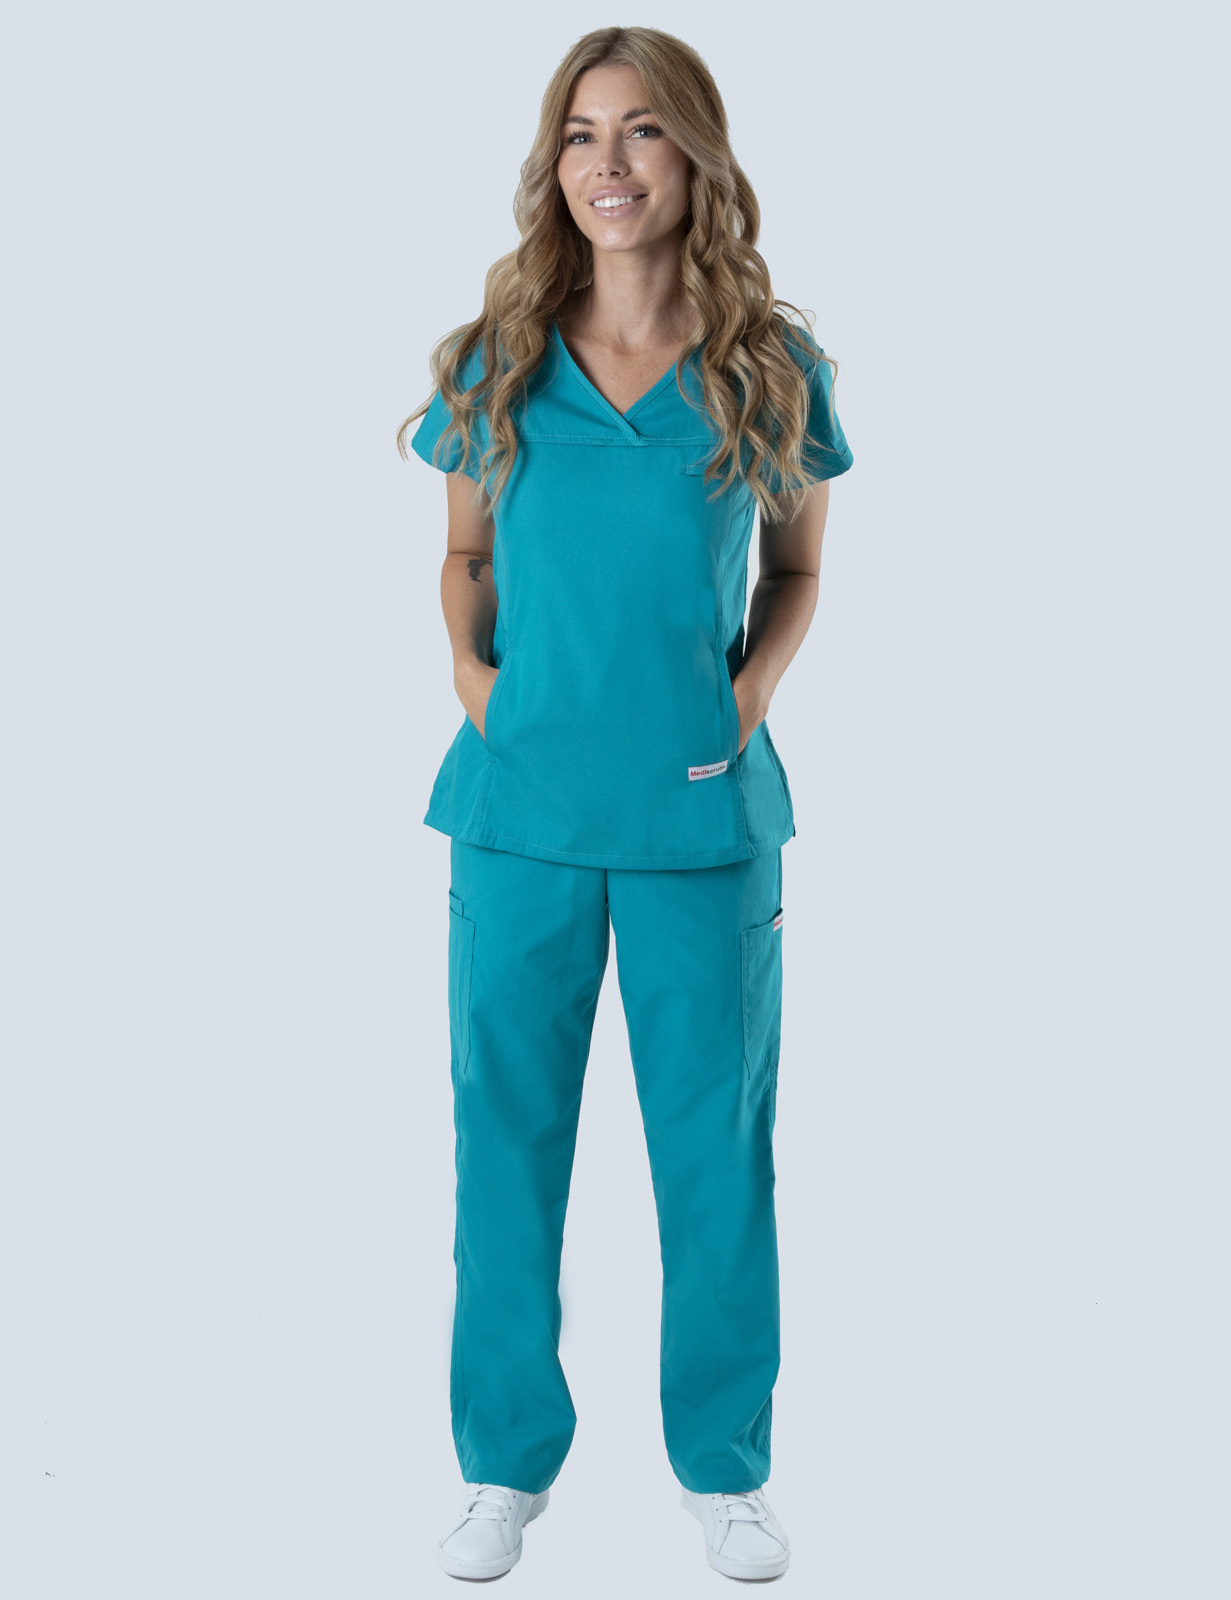 Belmont Private Hospital - ECT Registered Nurse Uniform Set Bundle (Women's Fit Solid Top and Cargo Pants in Royal + Logos)